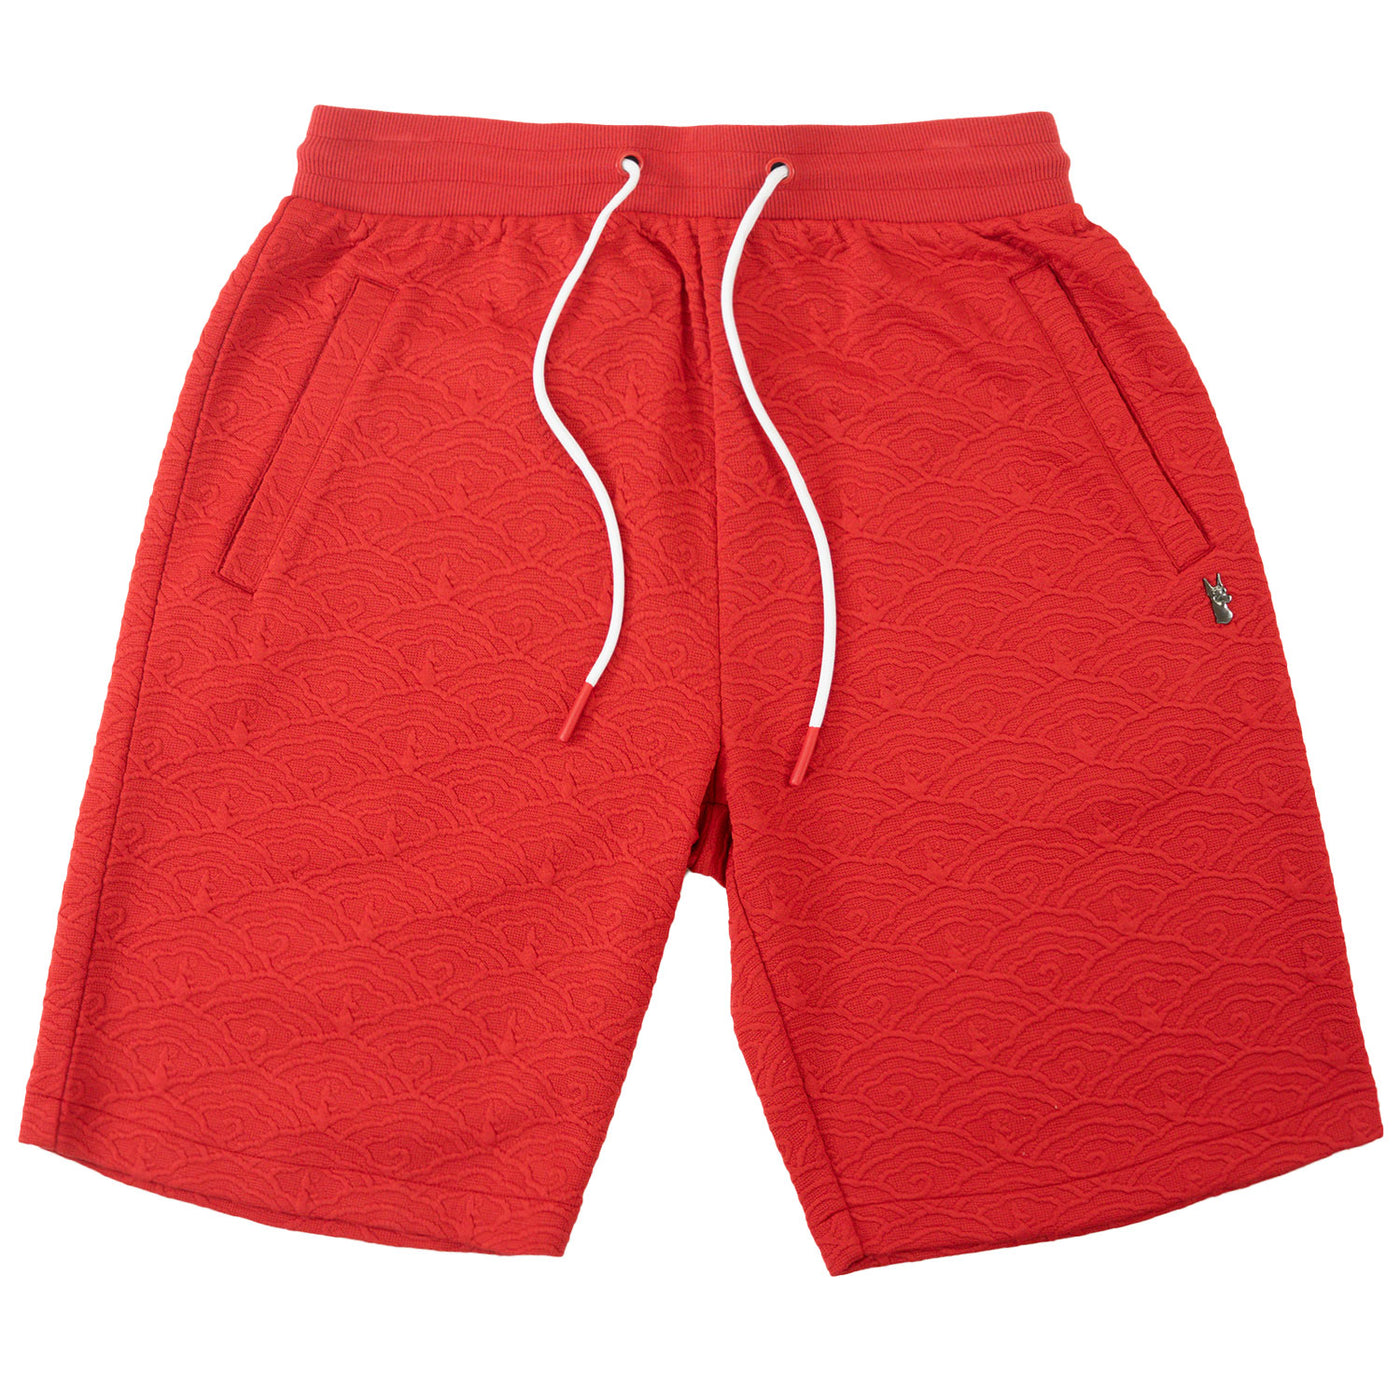 M654 Bellagio Shorts - Red